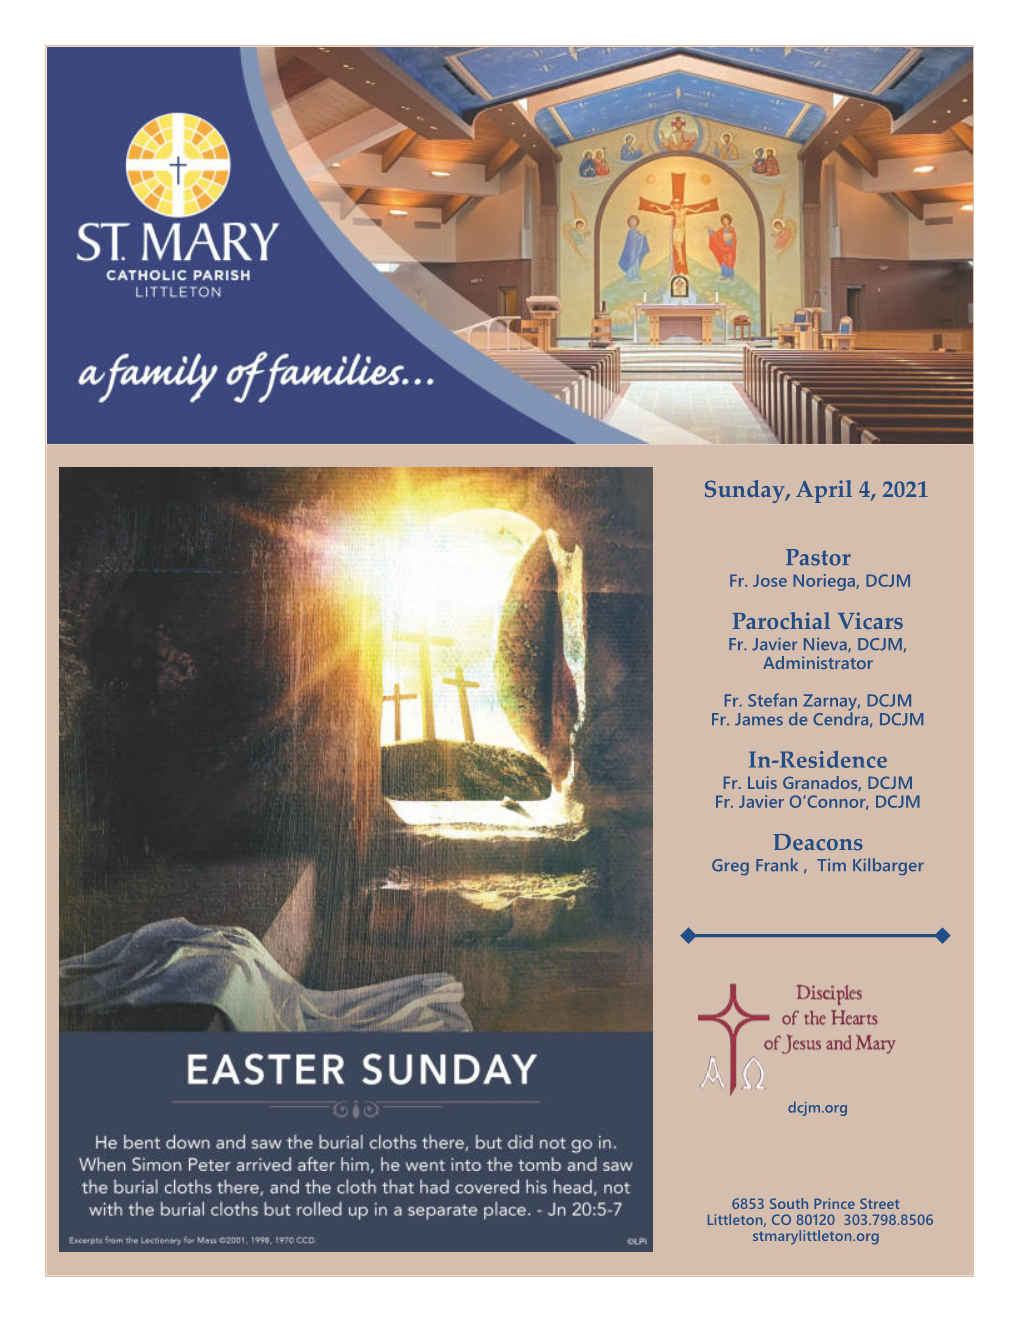 Pastor Parochial Vicars In-Residence Deacons Sunday, April 4, 2021